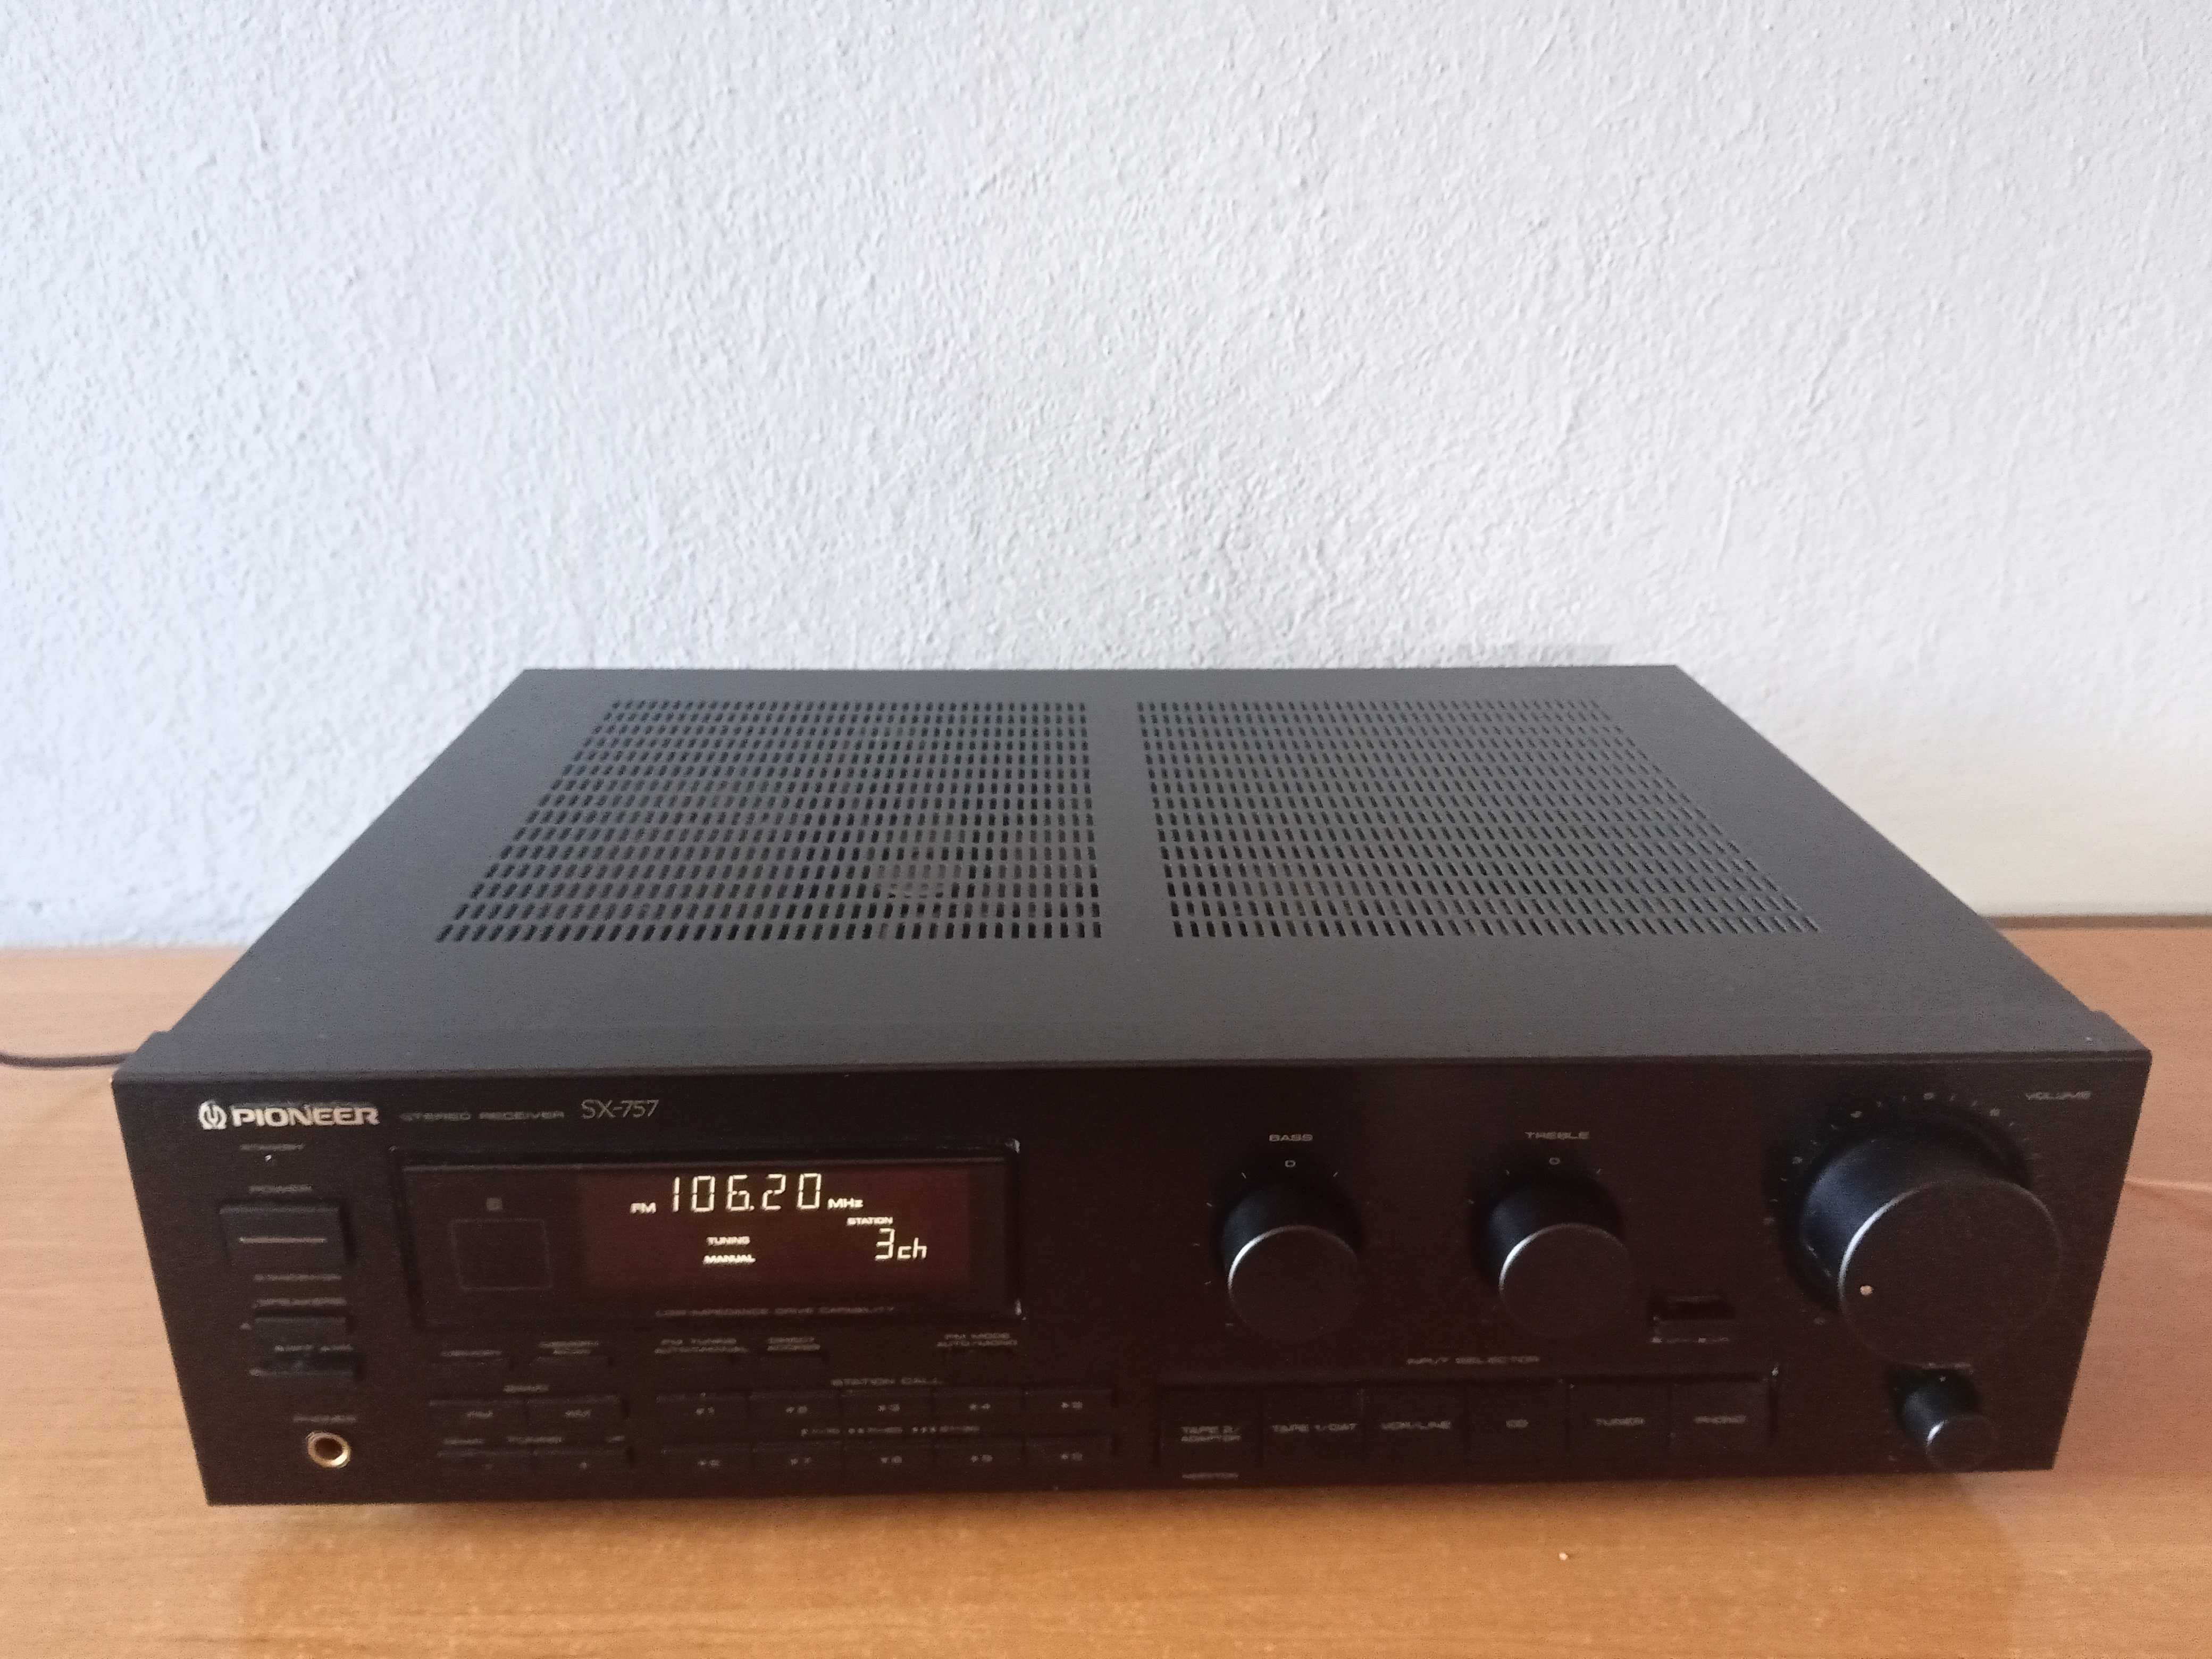 Pioneer SX-757 amplituner stereo